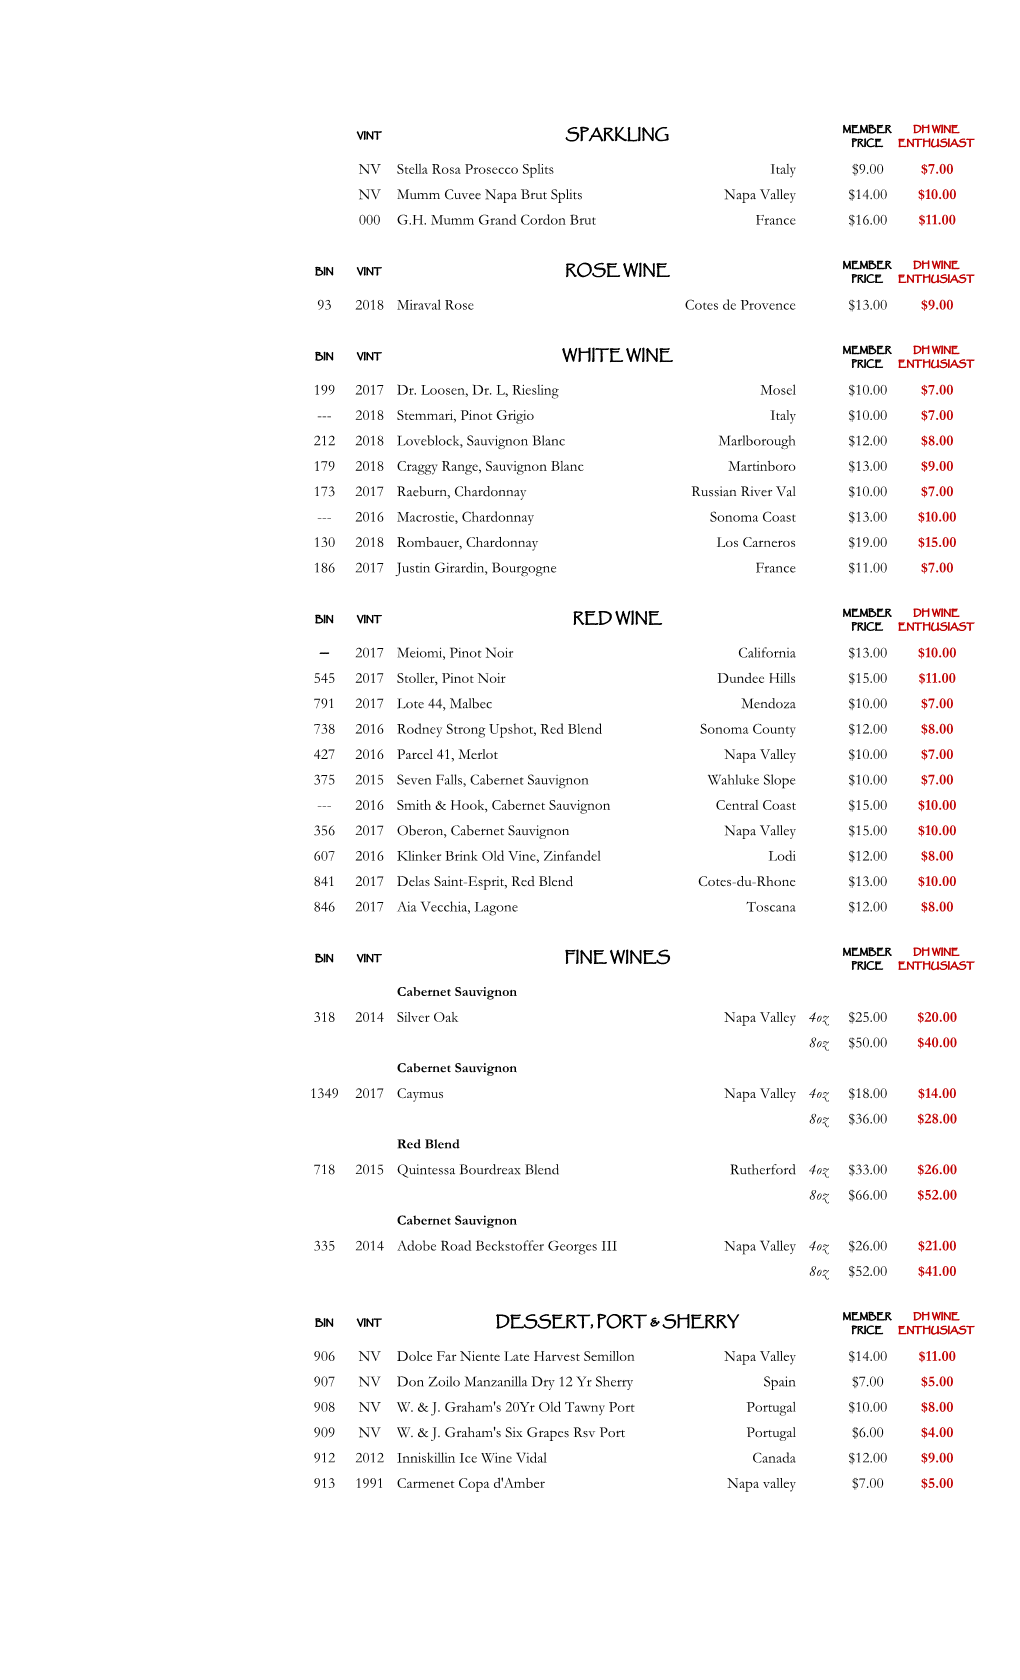 NV Stella Rosa Prosecco Splits Italy $9.00 $7.00 NV Mumm Cuvee Napa Brut Splits Napa Valley $14.00 $10.00 000 G.H. Mumm Grand Cordon Brut France $16.00 $11.00